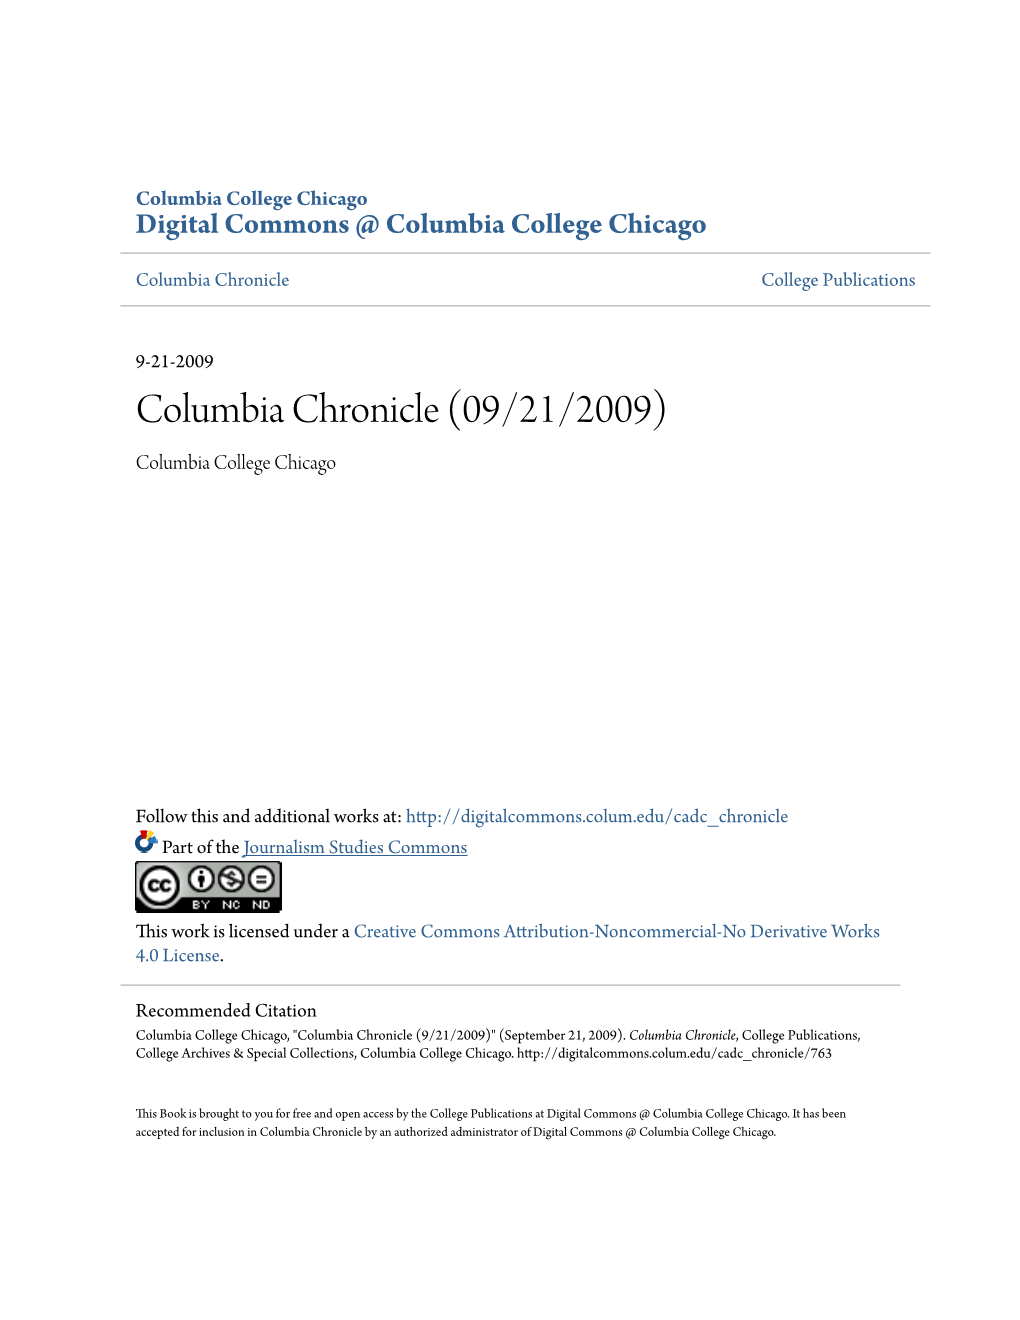 Columbia Chronicle (09/21/2009) Columbia College Chicago